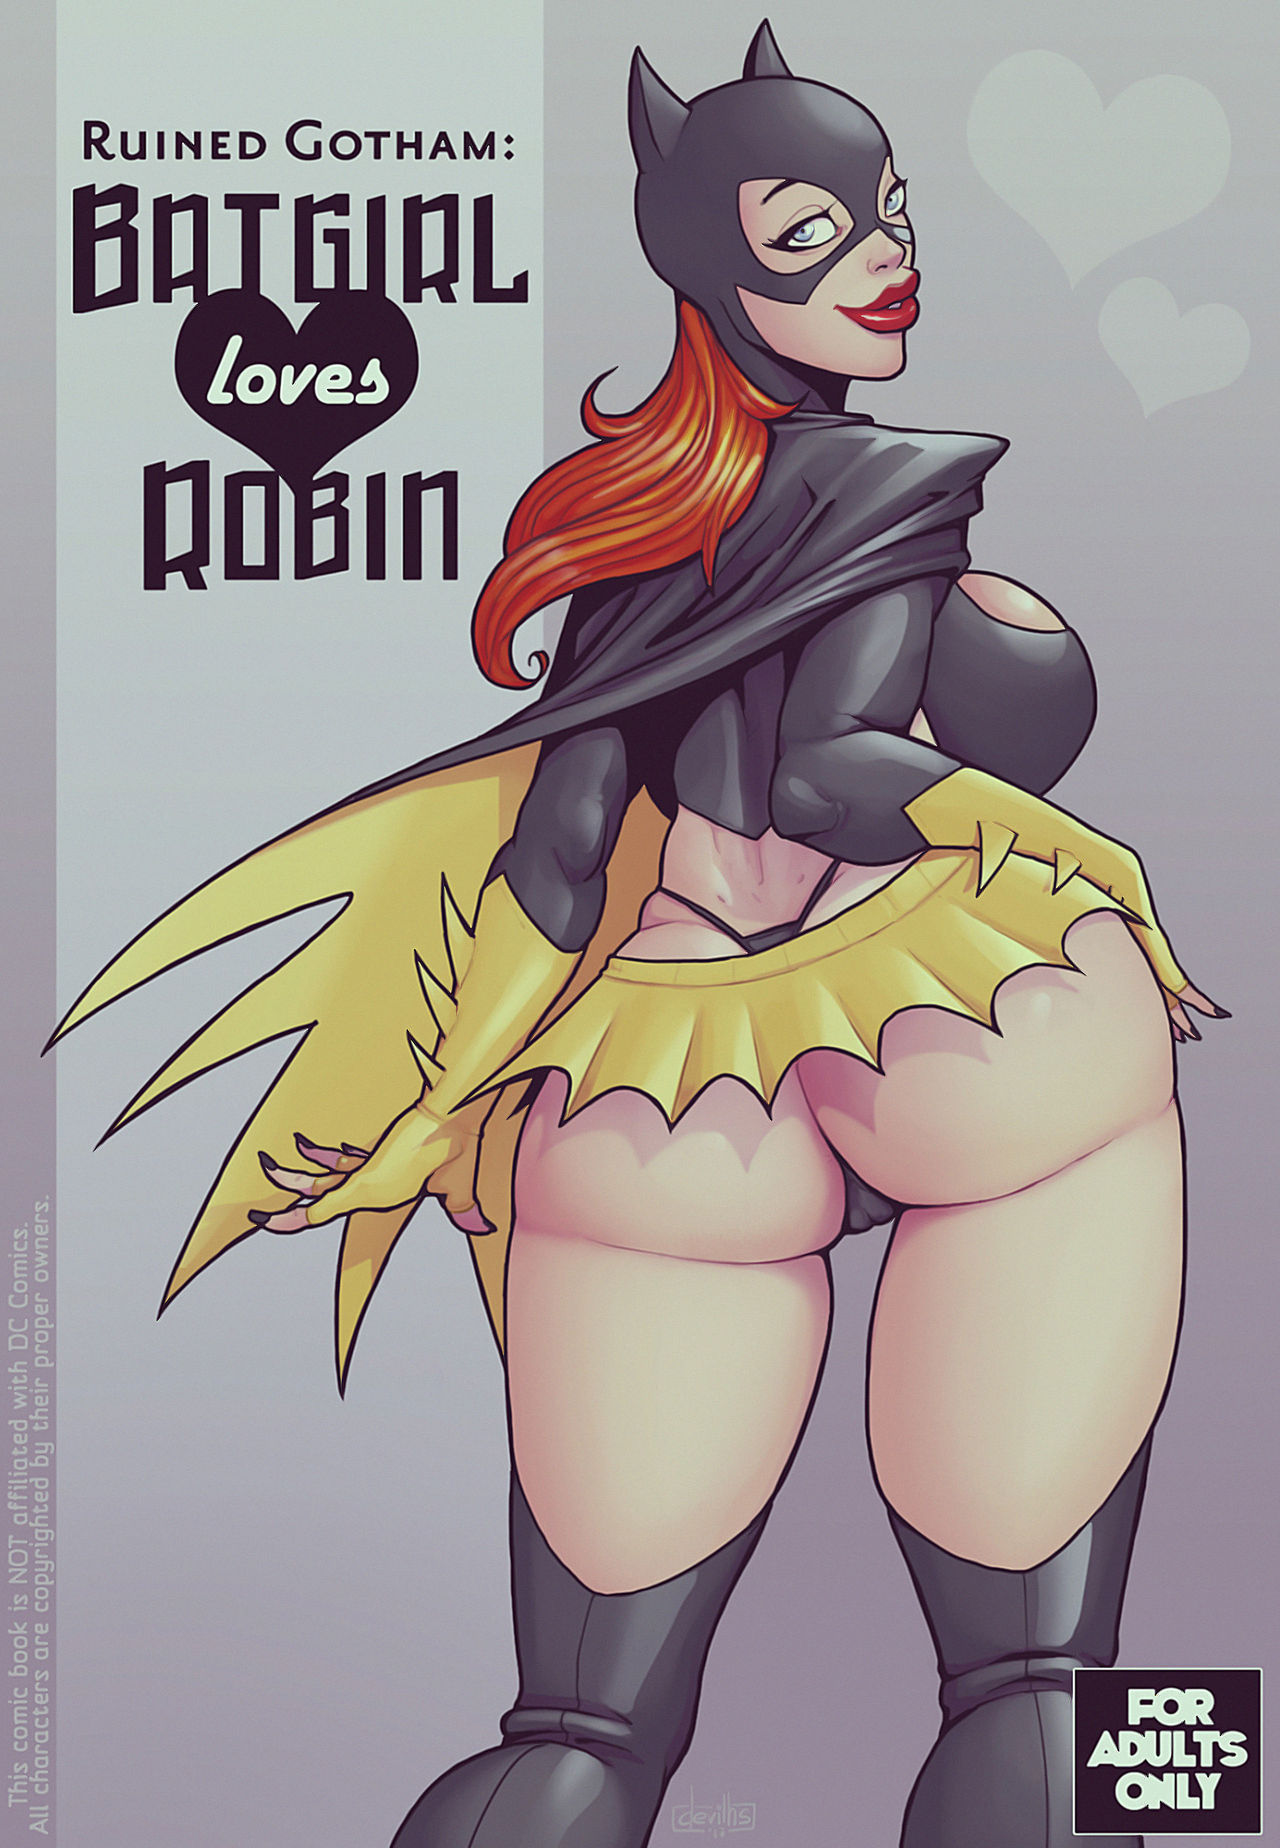 BATGIRL LOVES ROBIN